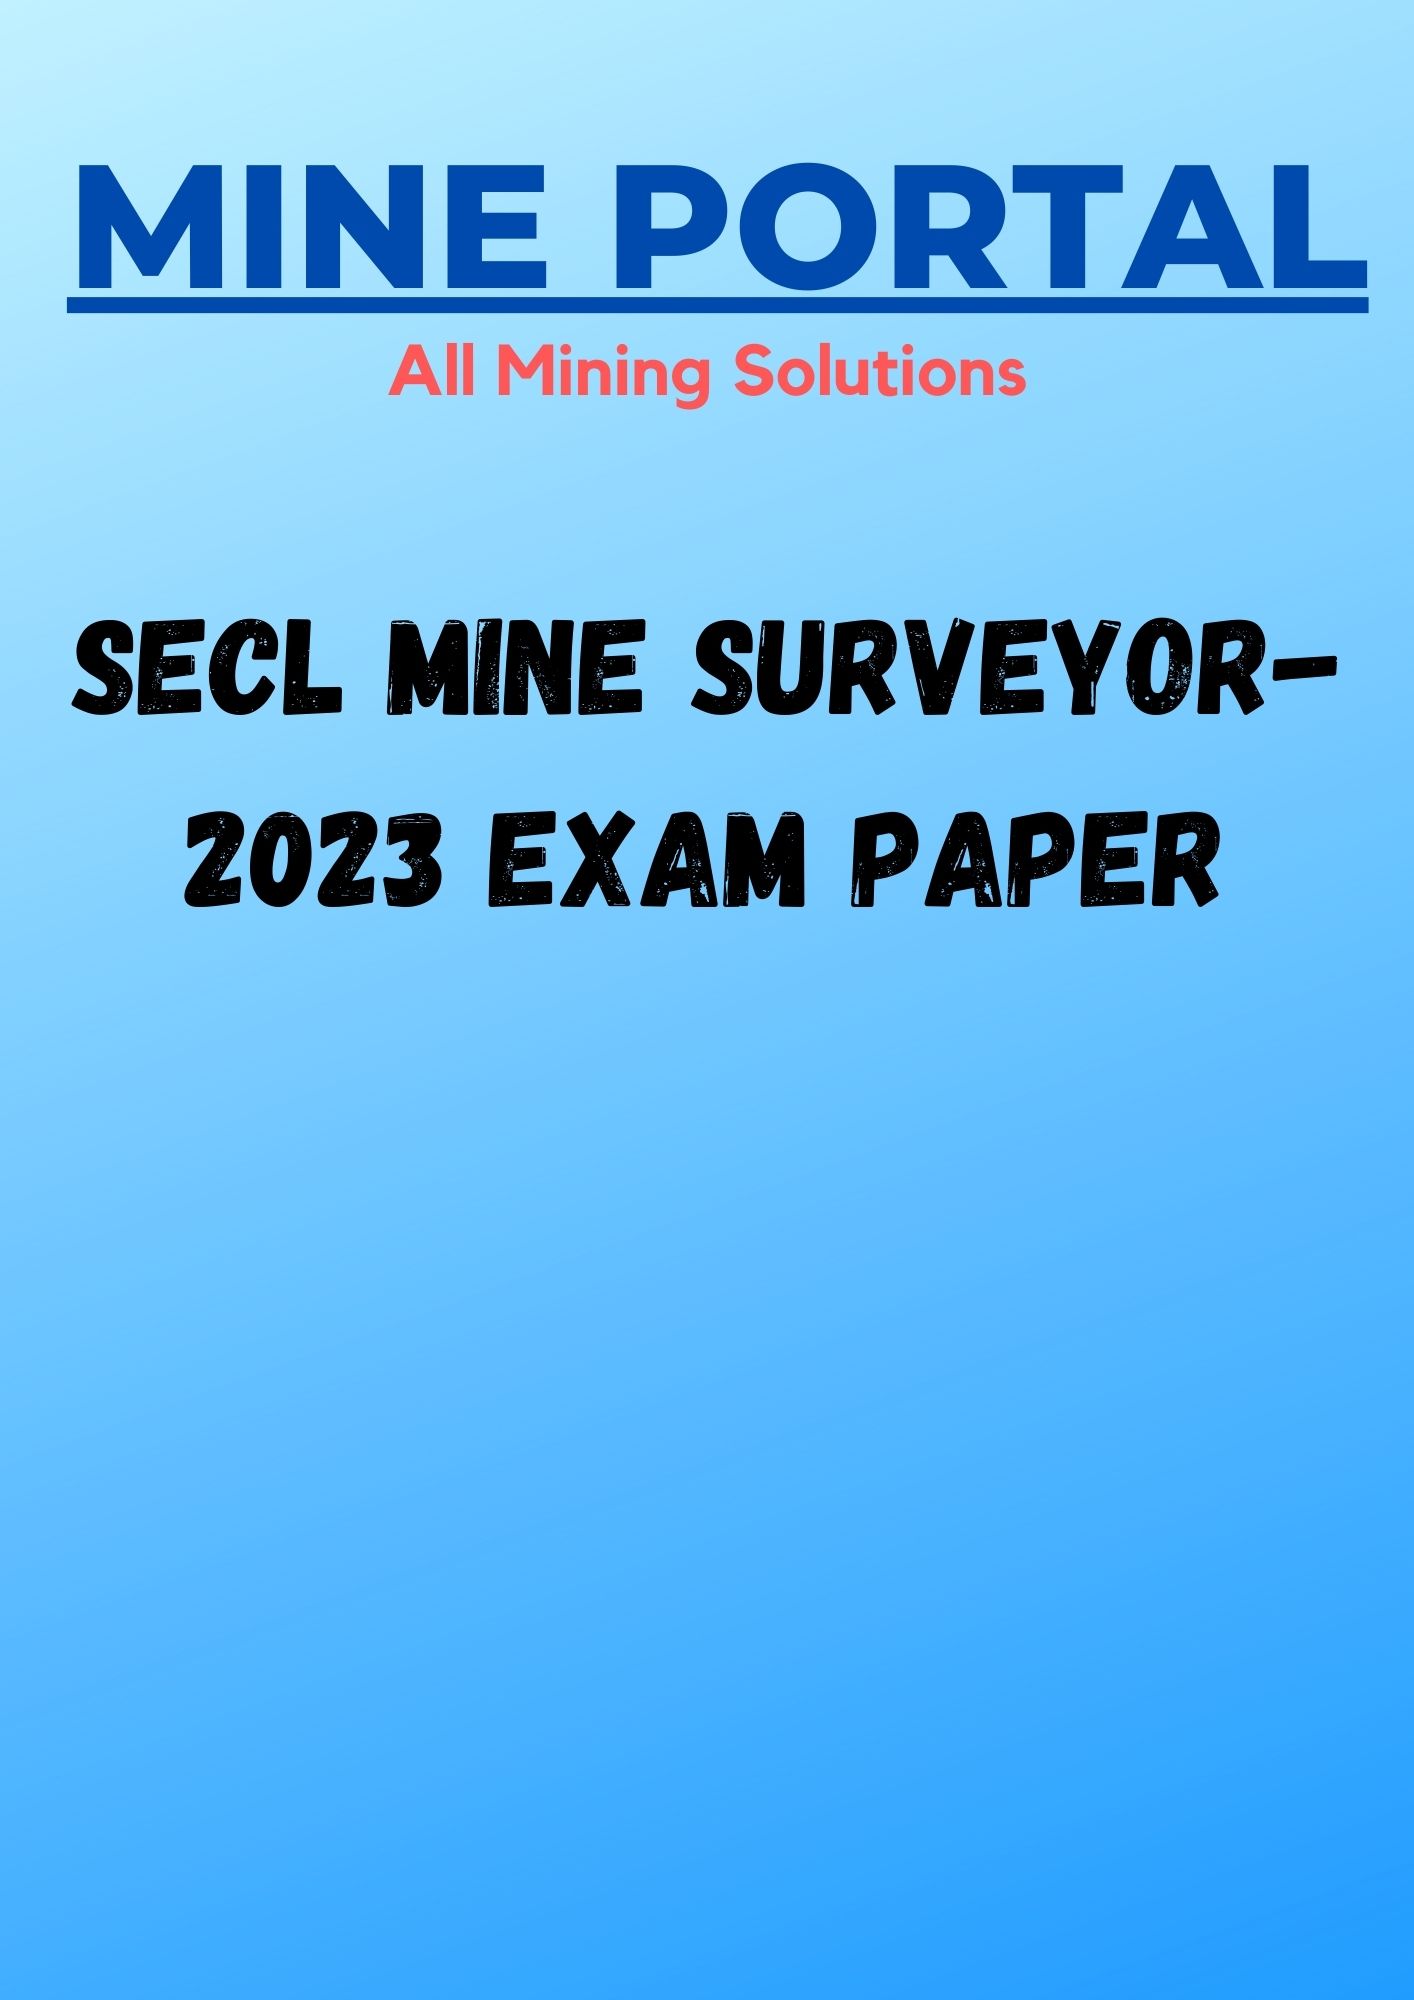 SECL MINE SURVEYOR EXAM-2023 PAPER